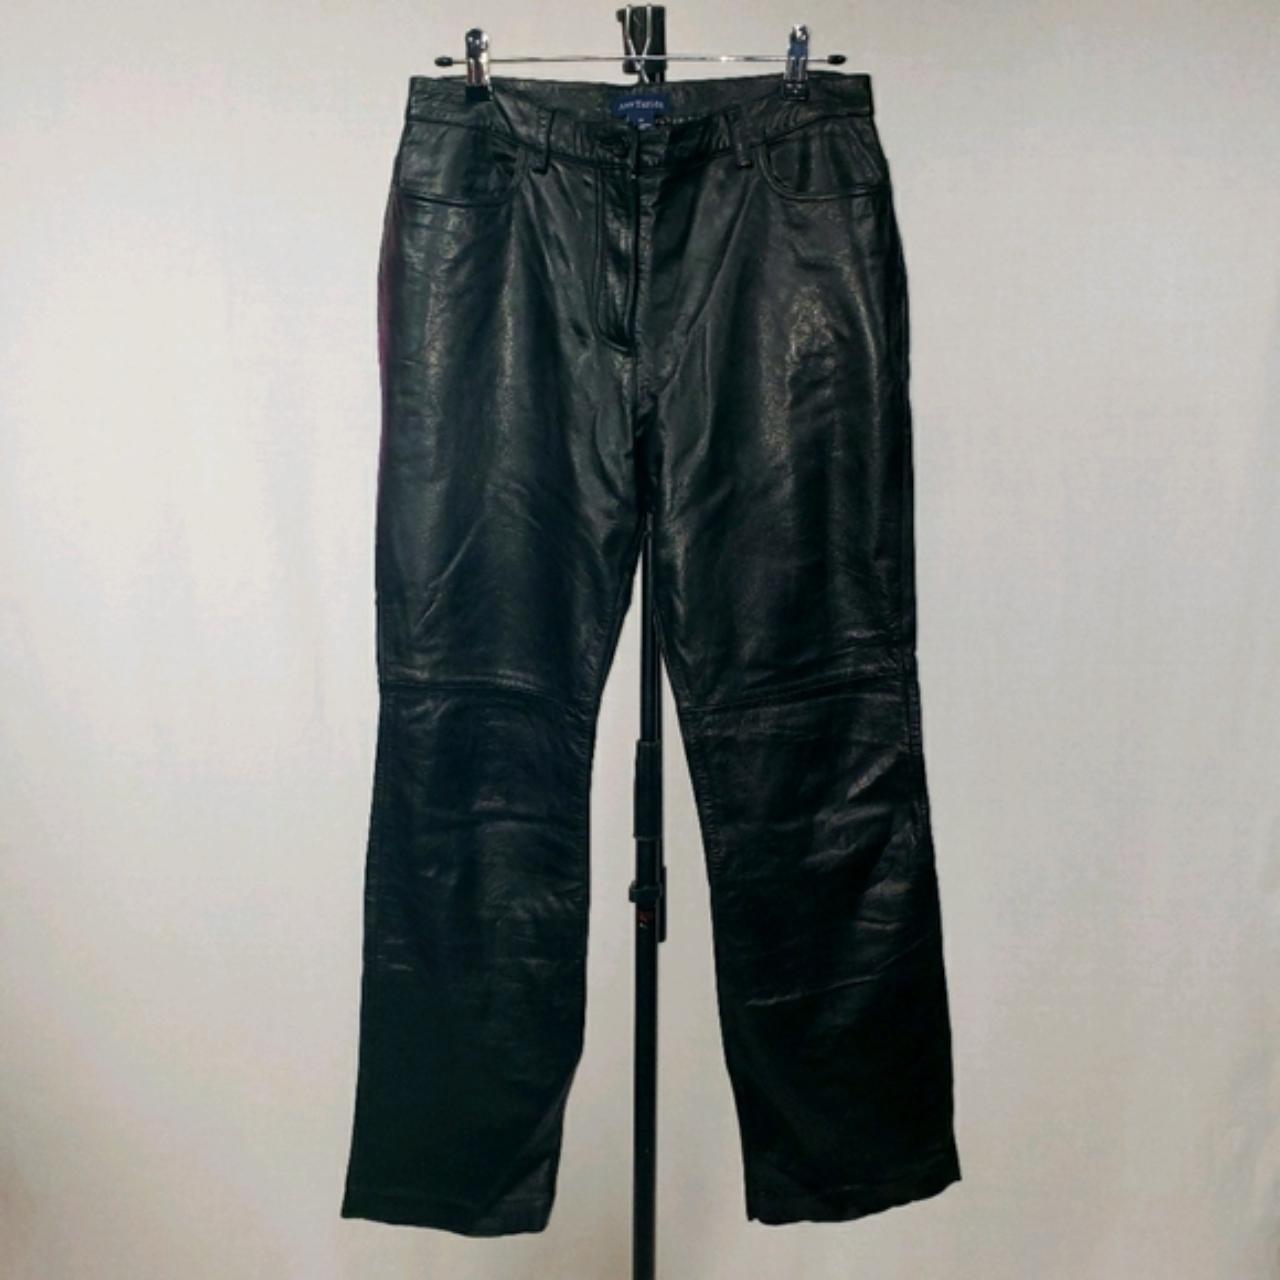 Ann Taylor soft lambskin leather pants. 4 pockets (2... - Depop